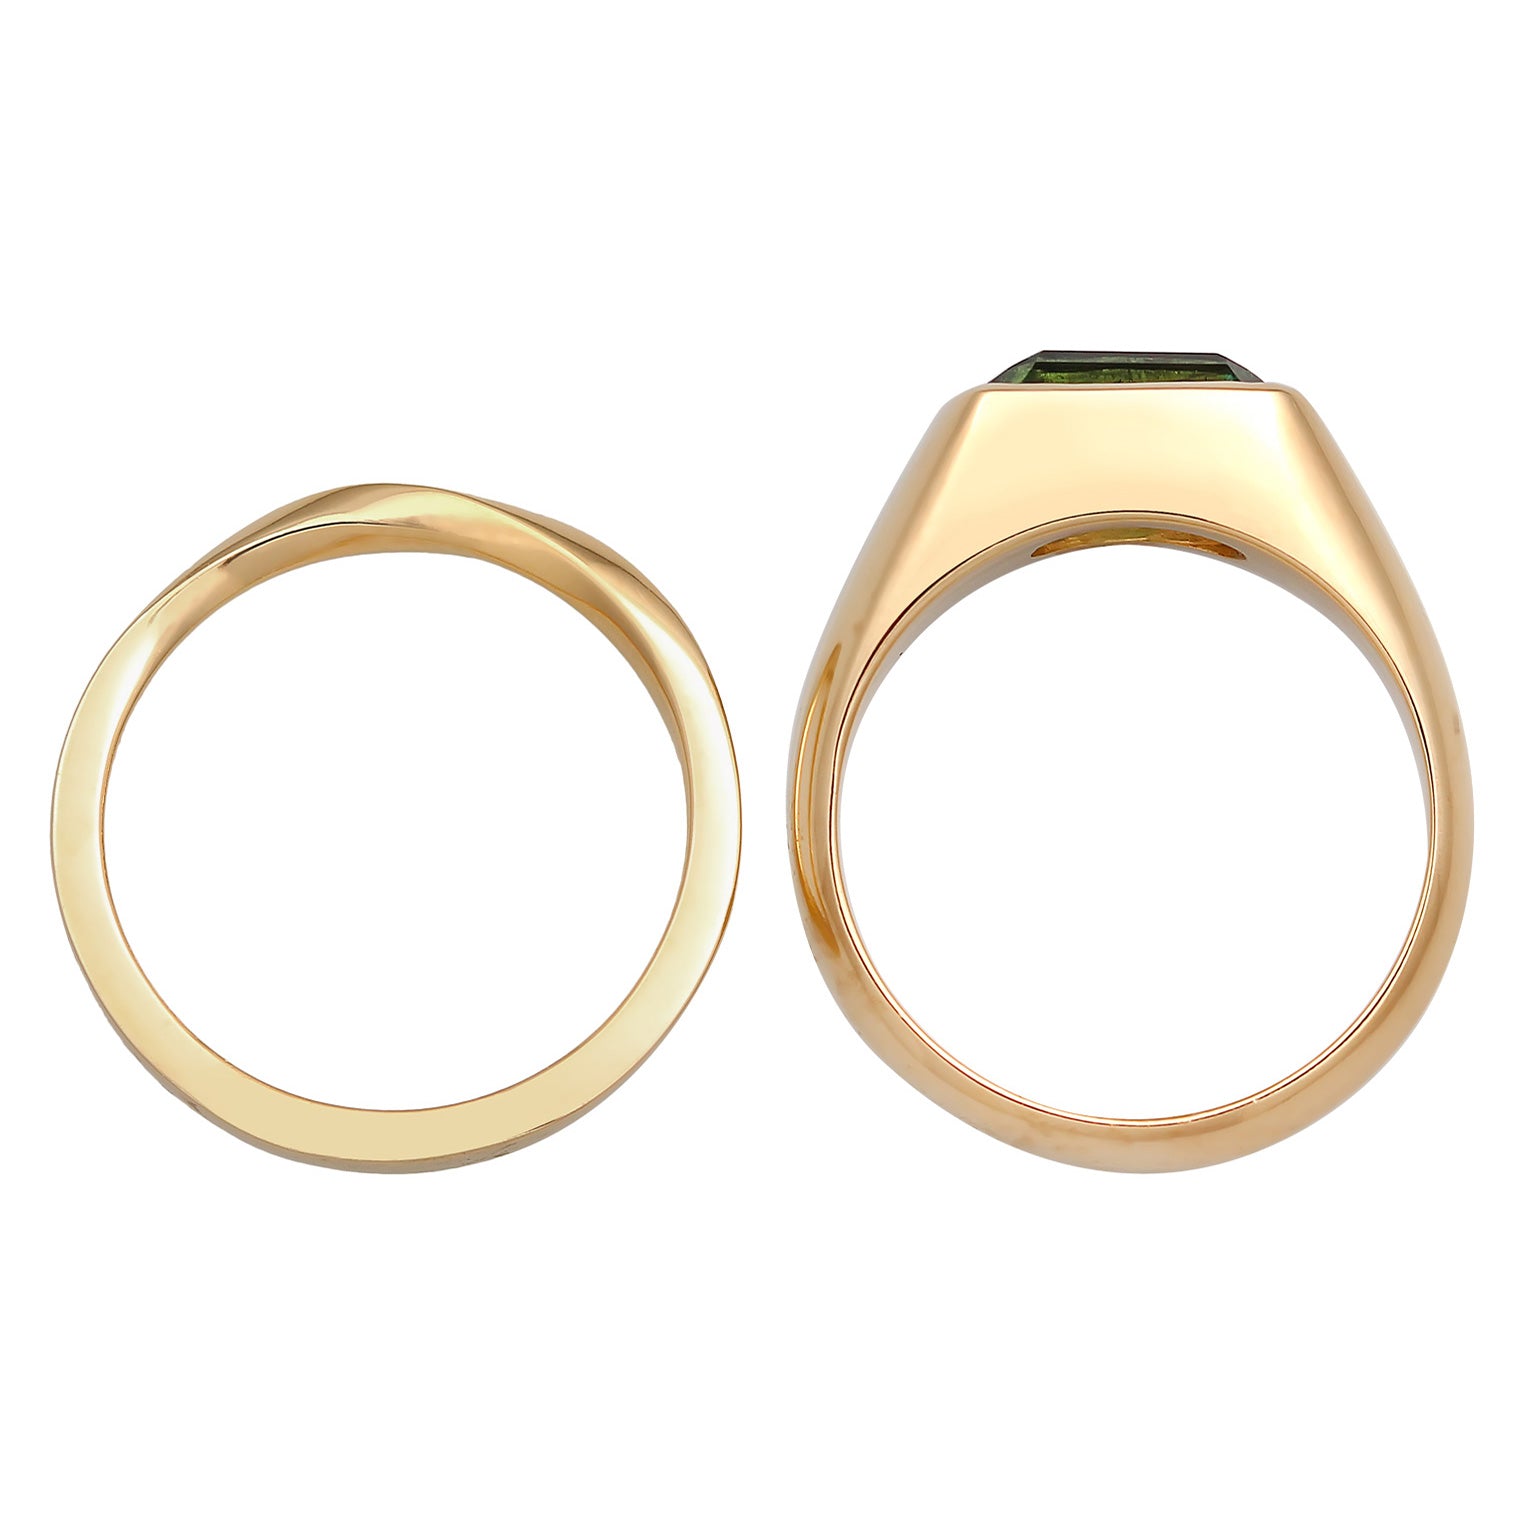 Signet ring quartz band ring set 925 silver – Elli Jewelry